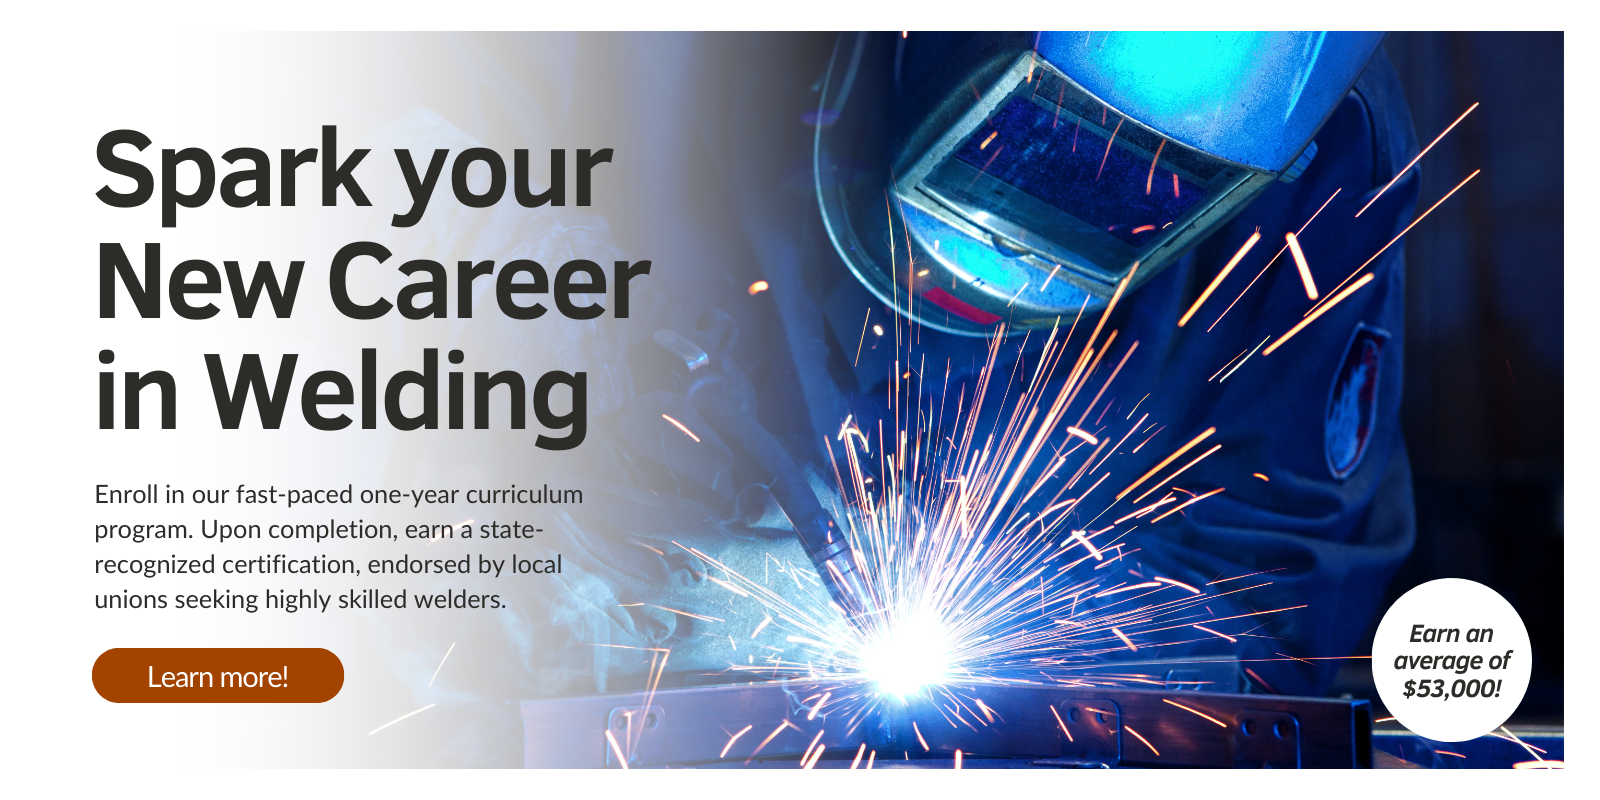 Spark your New Career in Welding